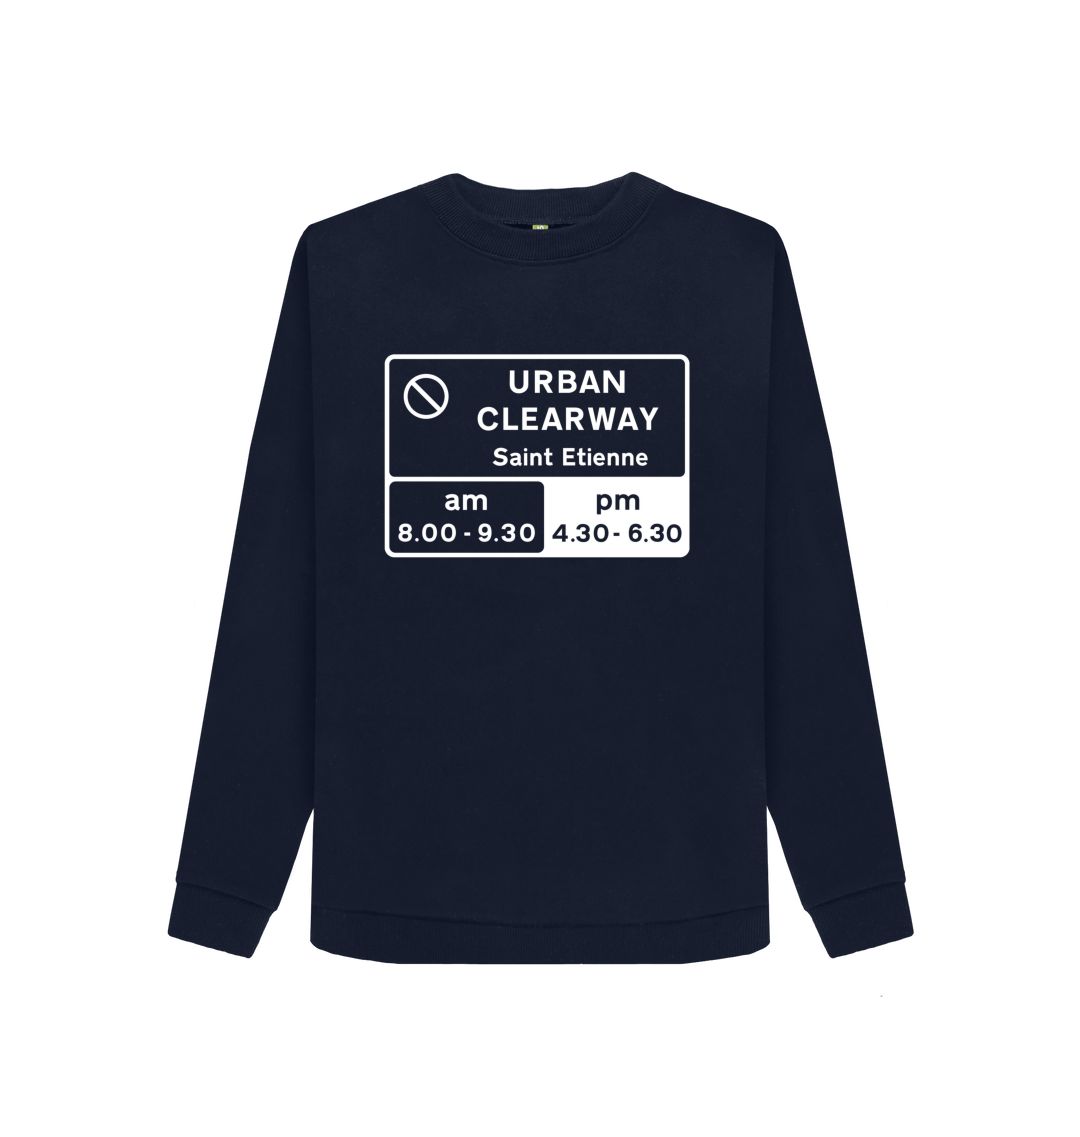 Navy Blue Urban Clearway women's sweatshirt